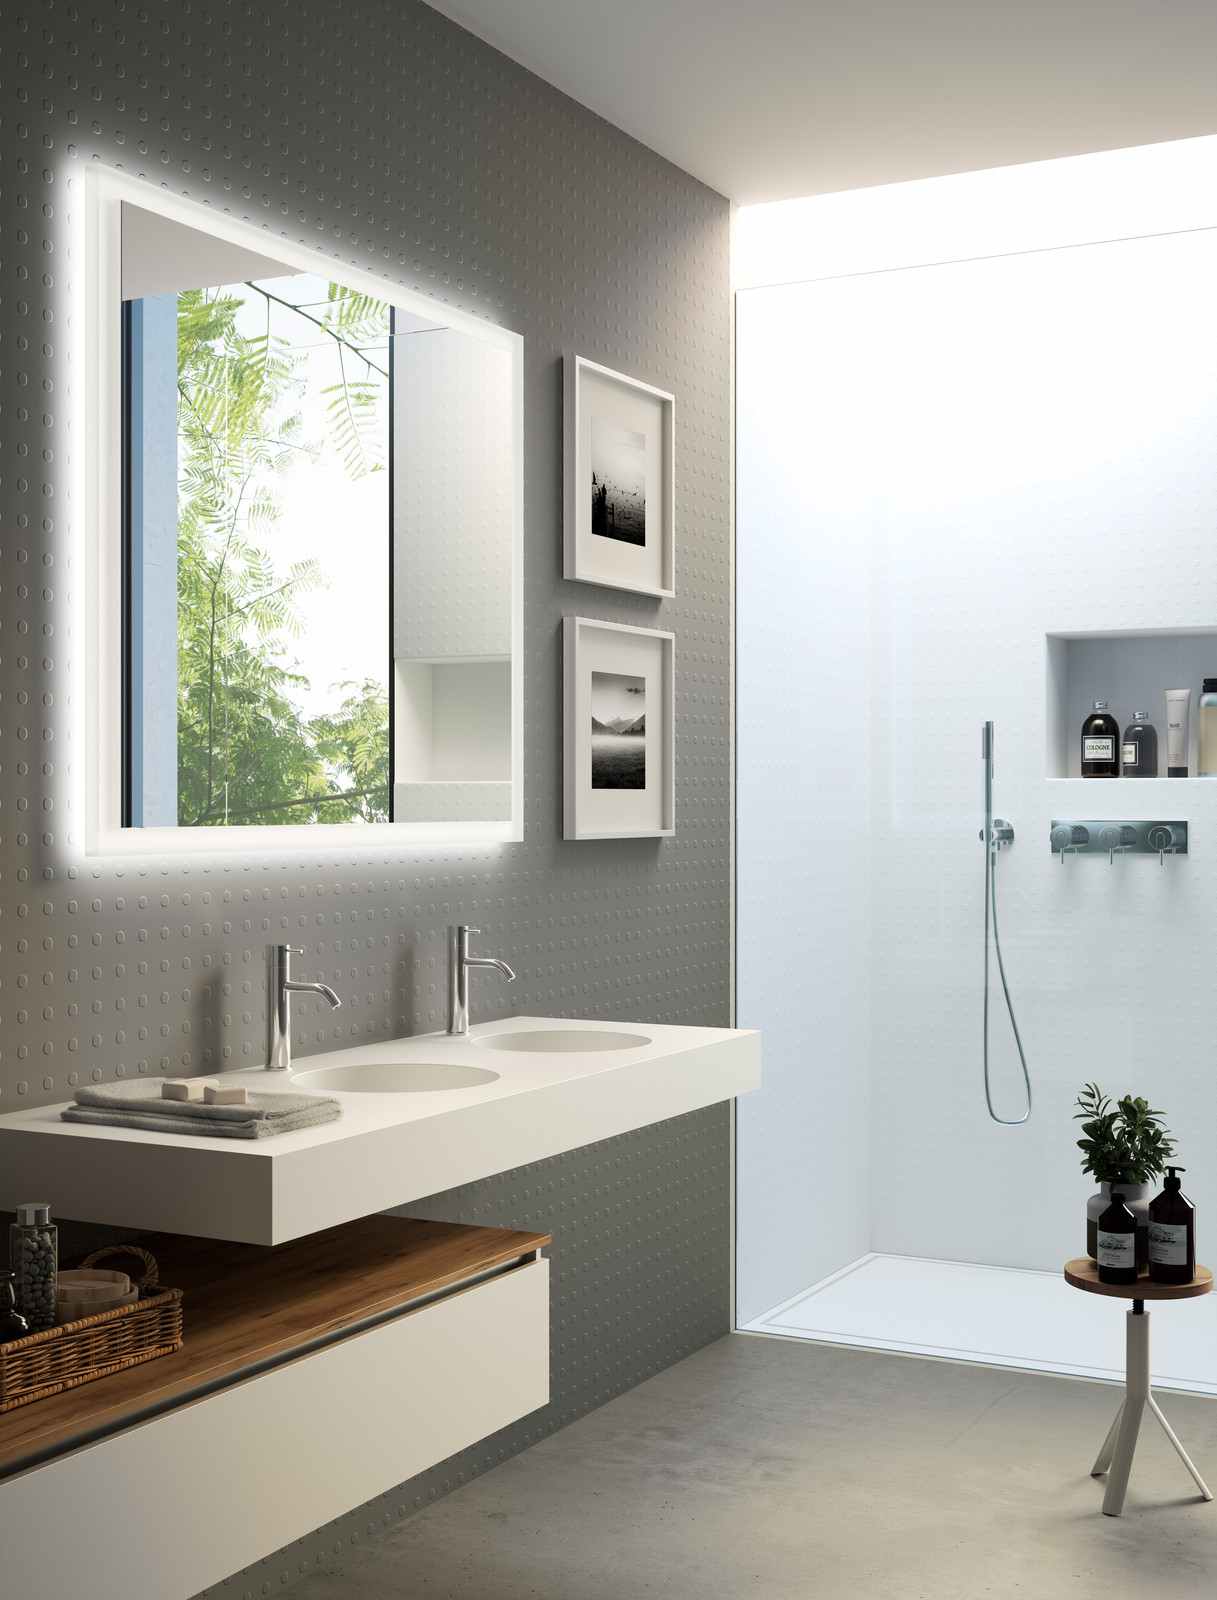 Badezimmer in Grau Wandfliesen Betonboden Holz Accessoires Spiegelschrank Wohntrends